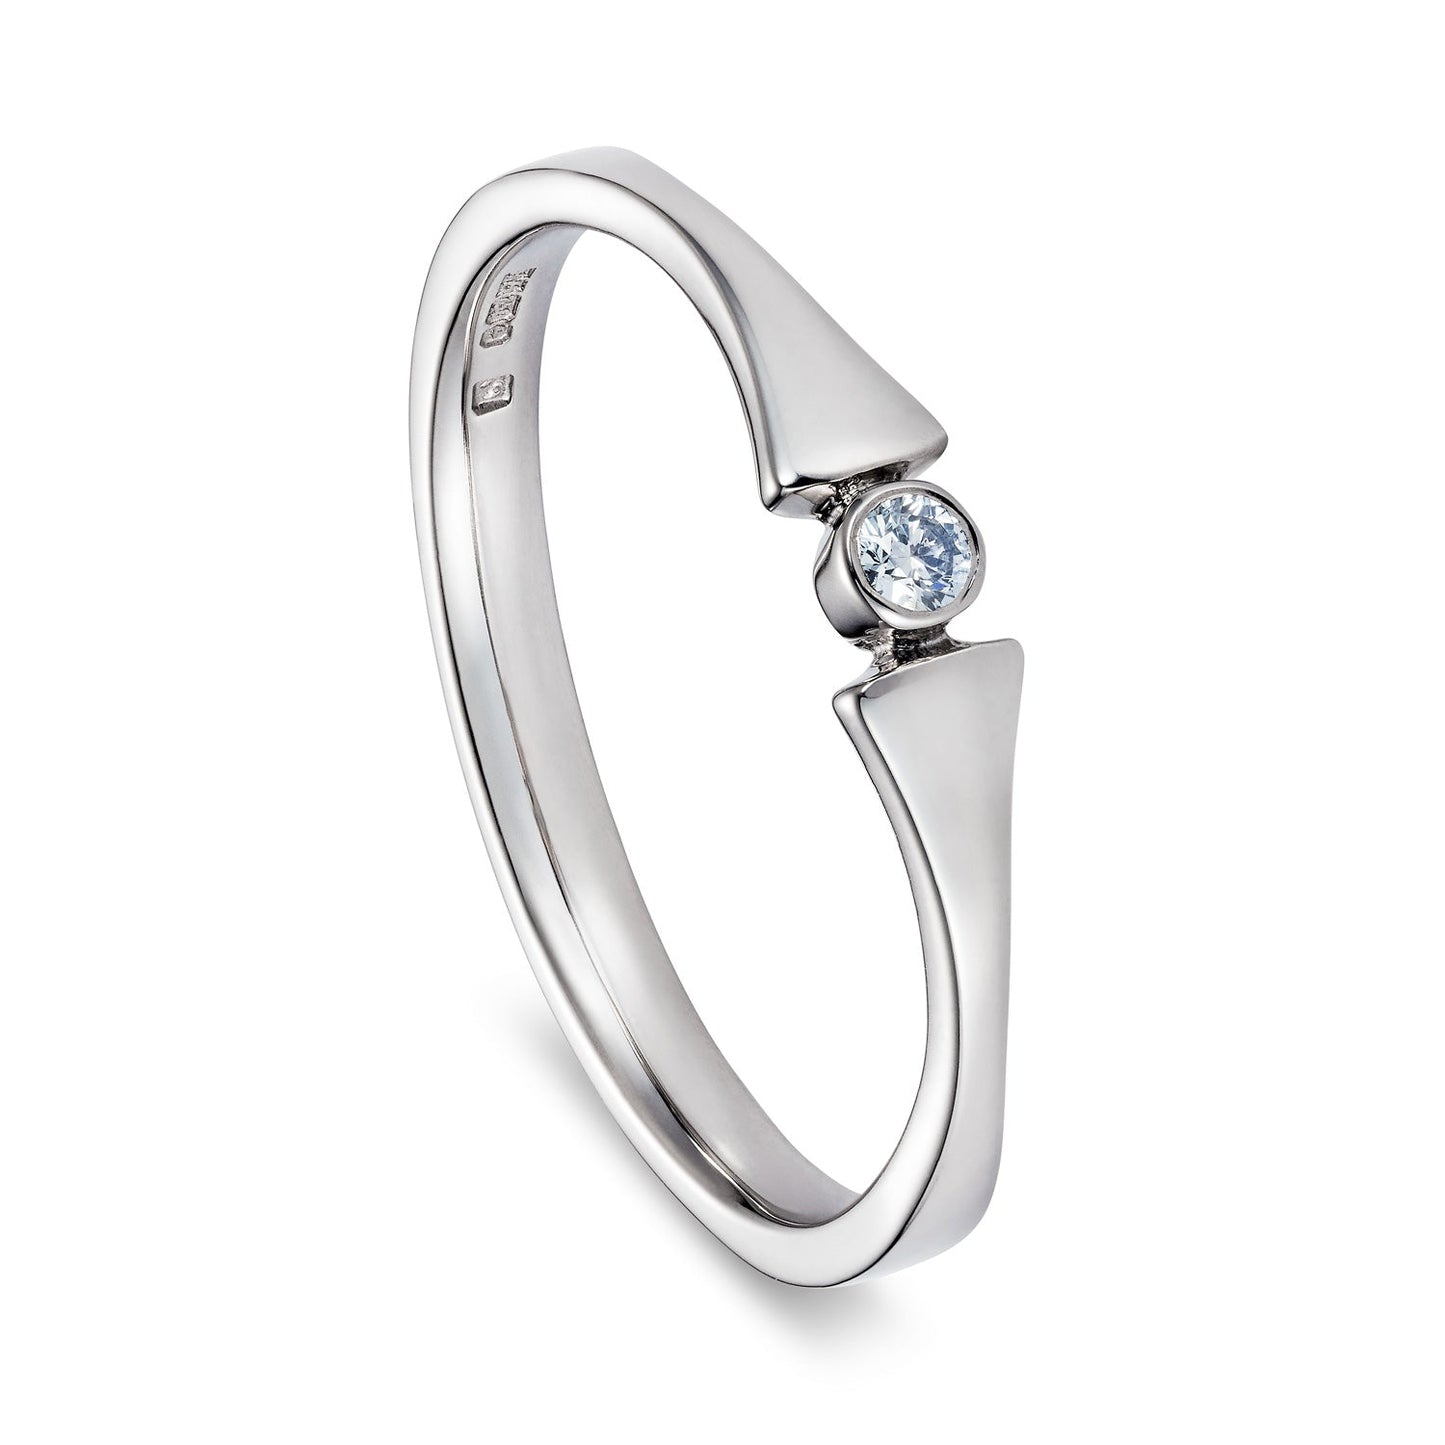 Queen Matilda Engagement Ring by Yasmin Everley